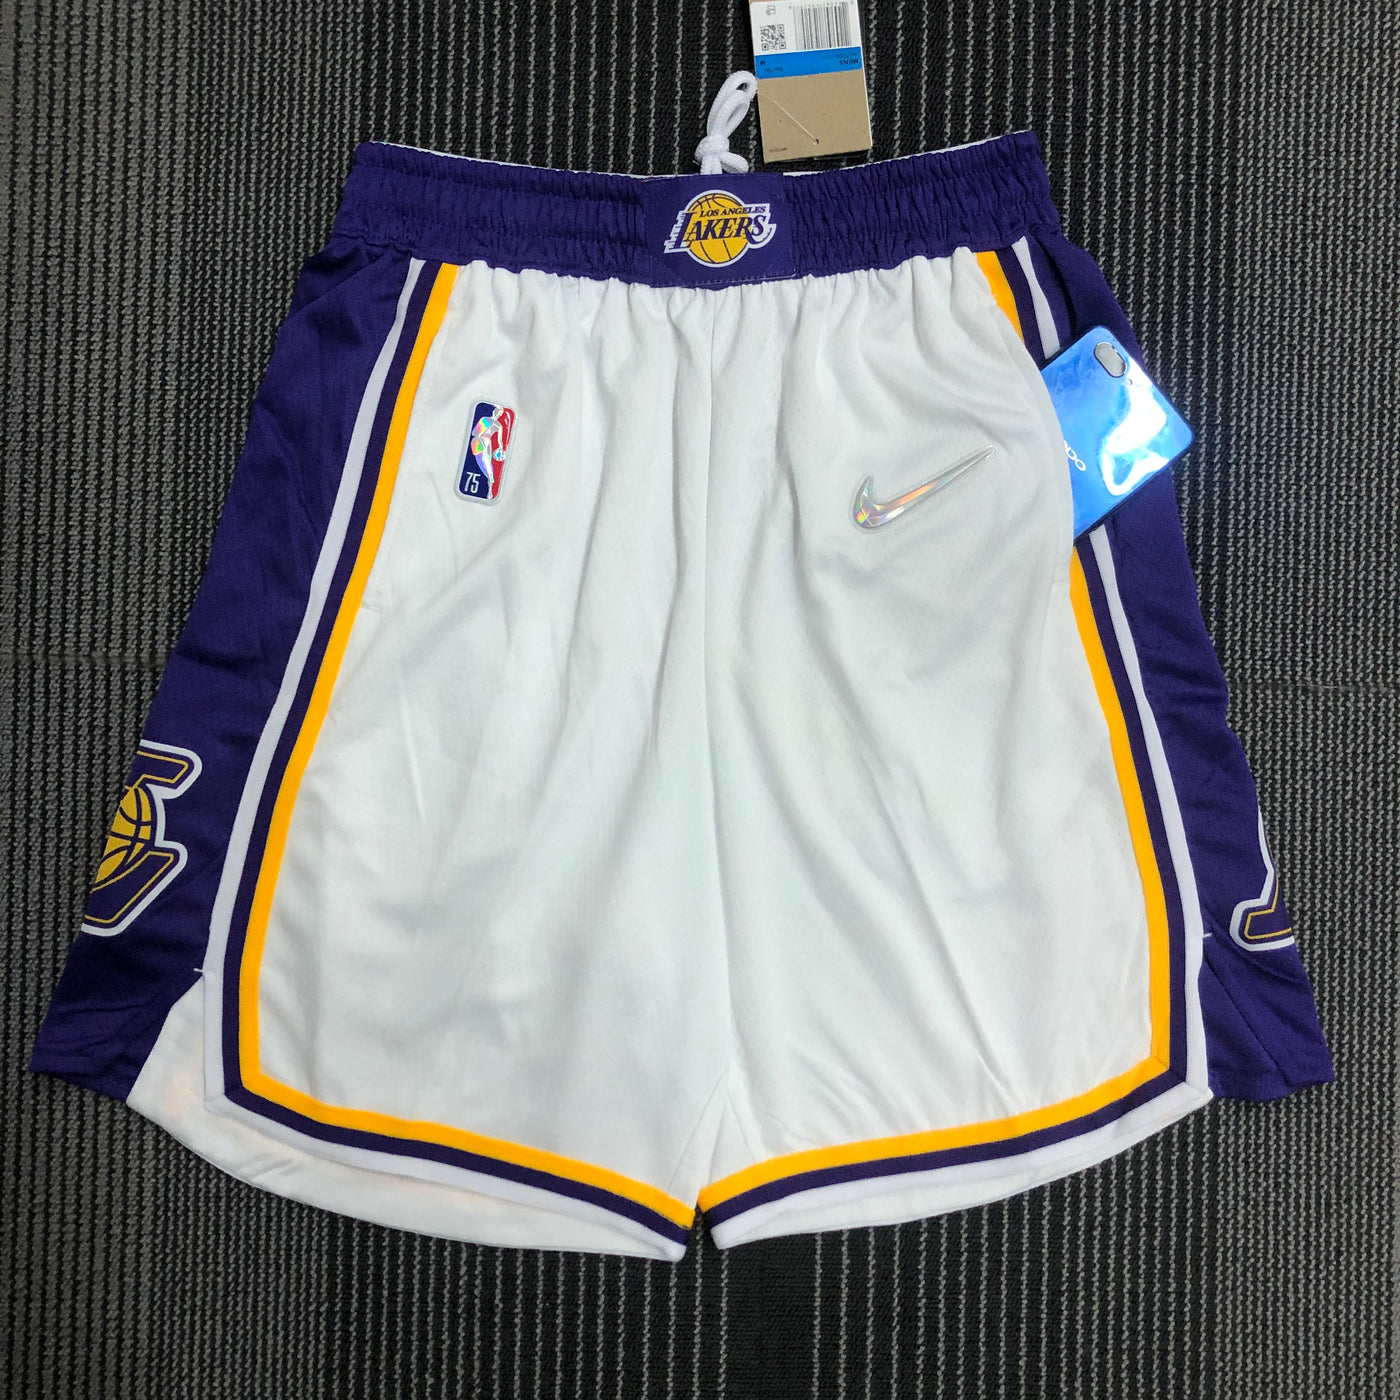 Shorts der Los Angeles Lakers